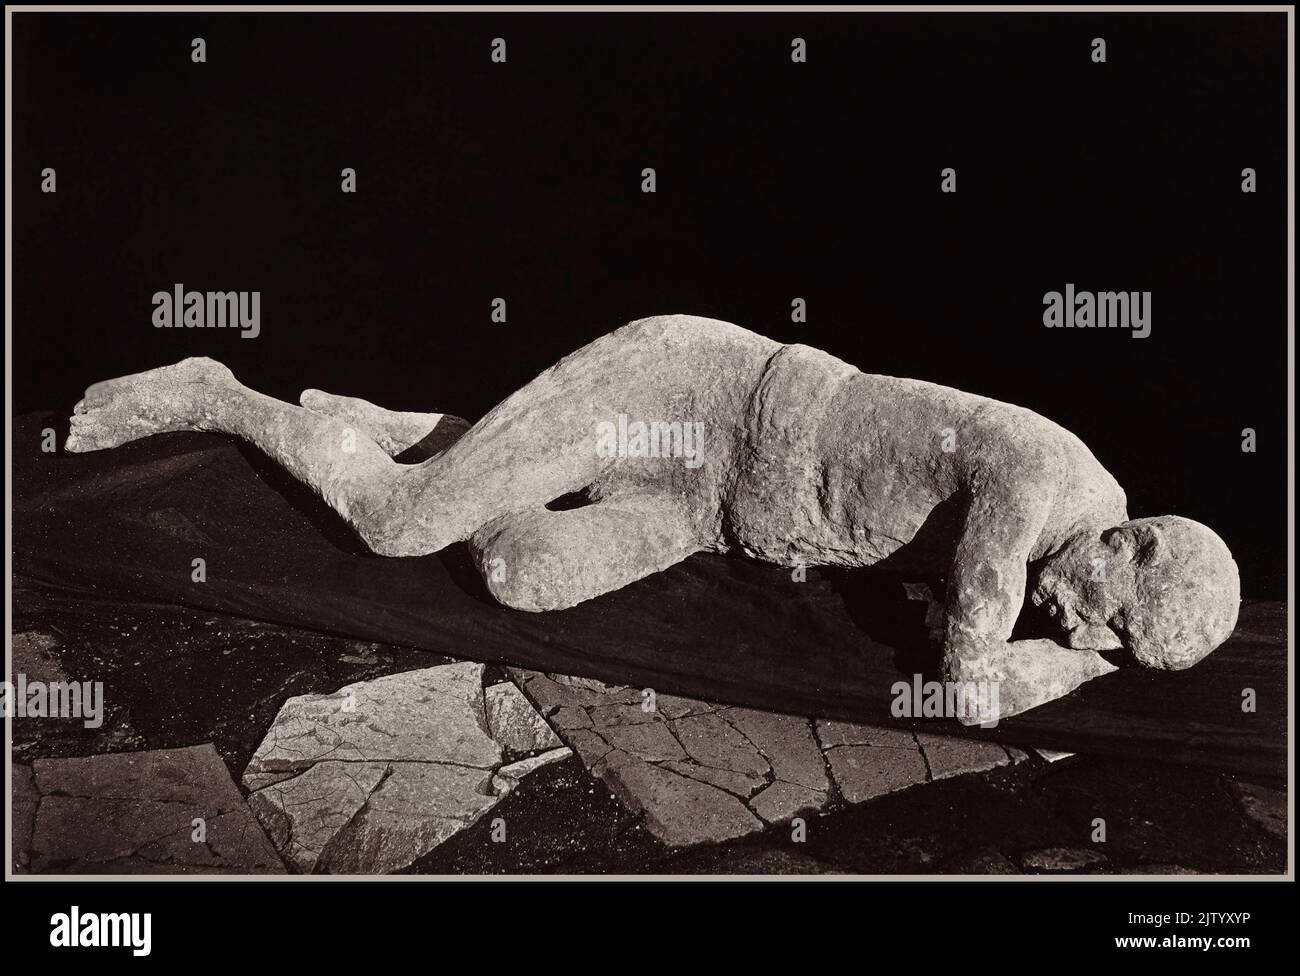 VESUVIUS BODY POMPEII Petrified body cast in ash, a poignant victim of the eruption of Mt Vesuvius volcano in Pompeii, Italy 'Giorgio Sommer, Impronte umane 'Human Footprints' (Pompeii), 1873, albumen print image: Stock Photo